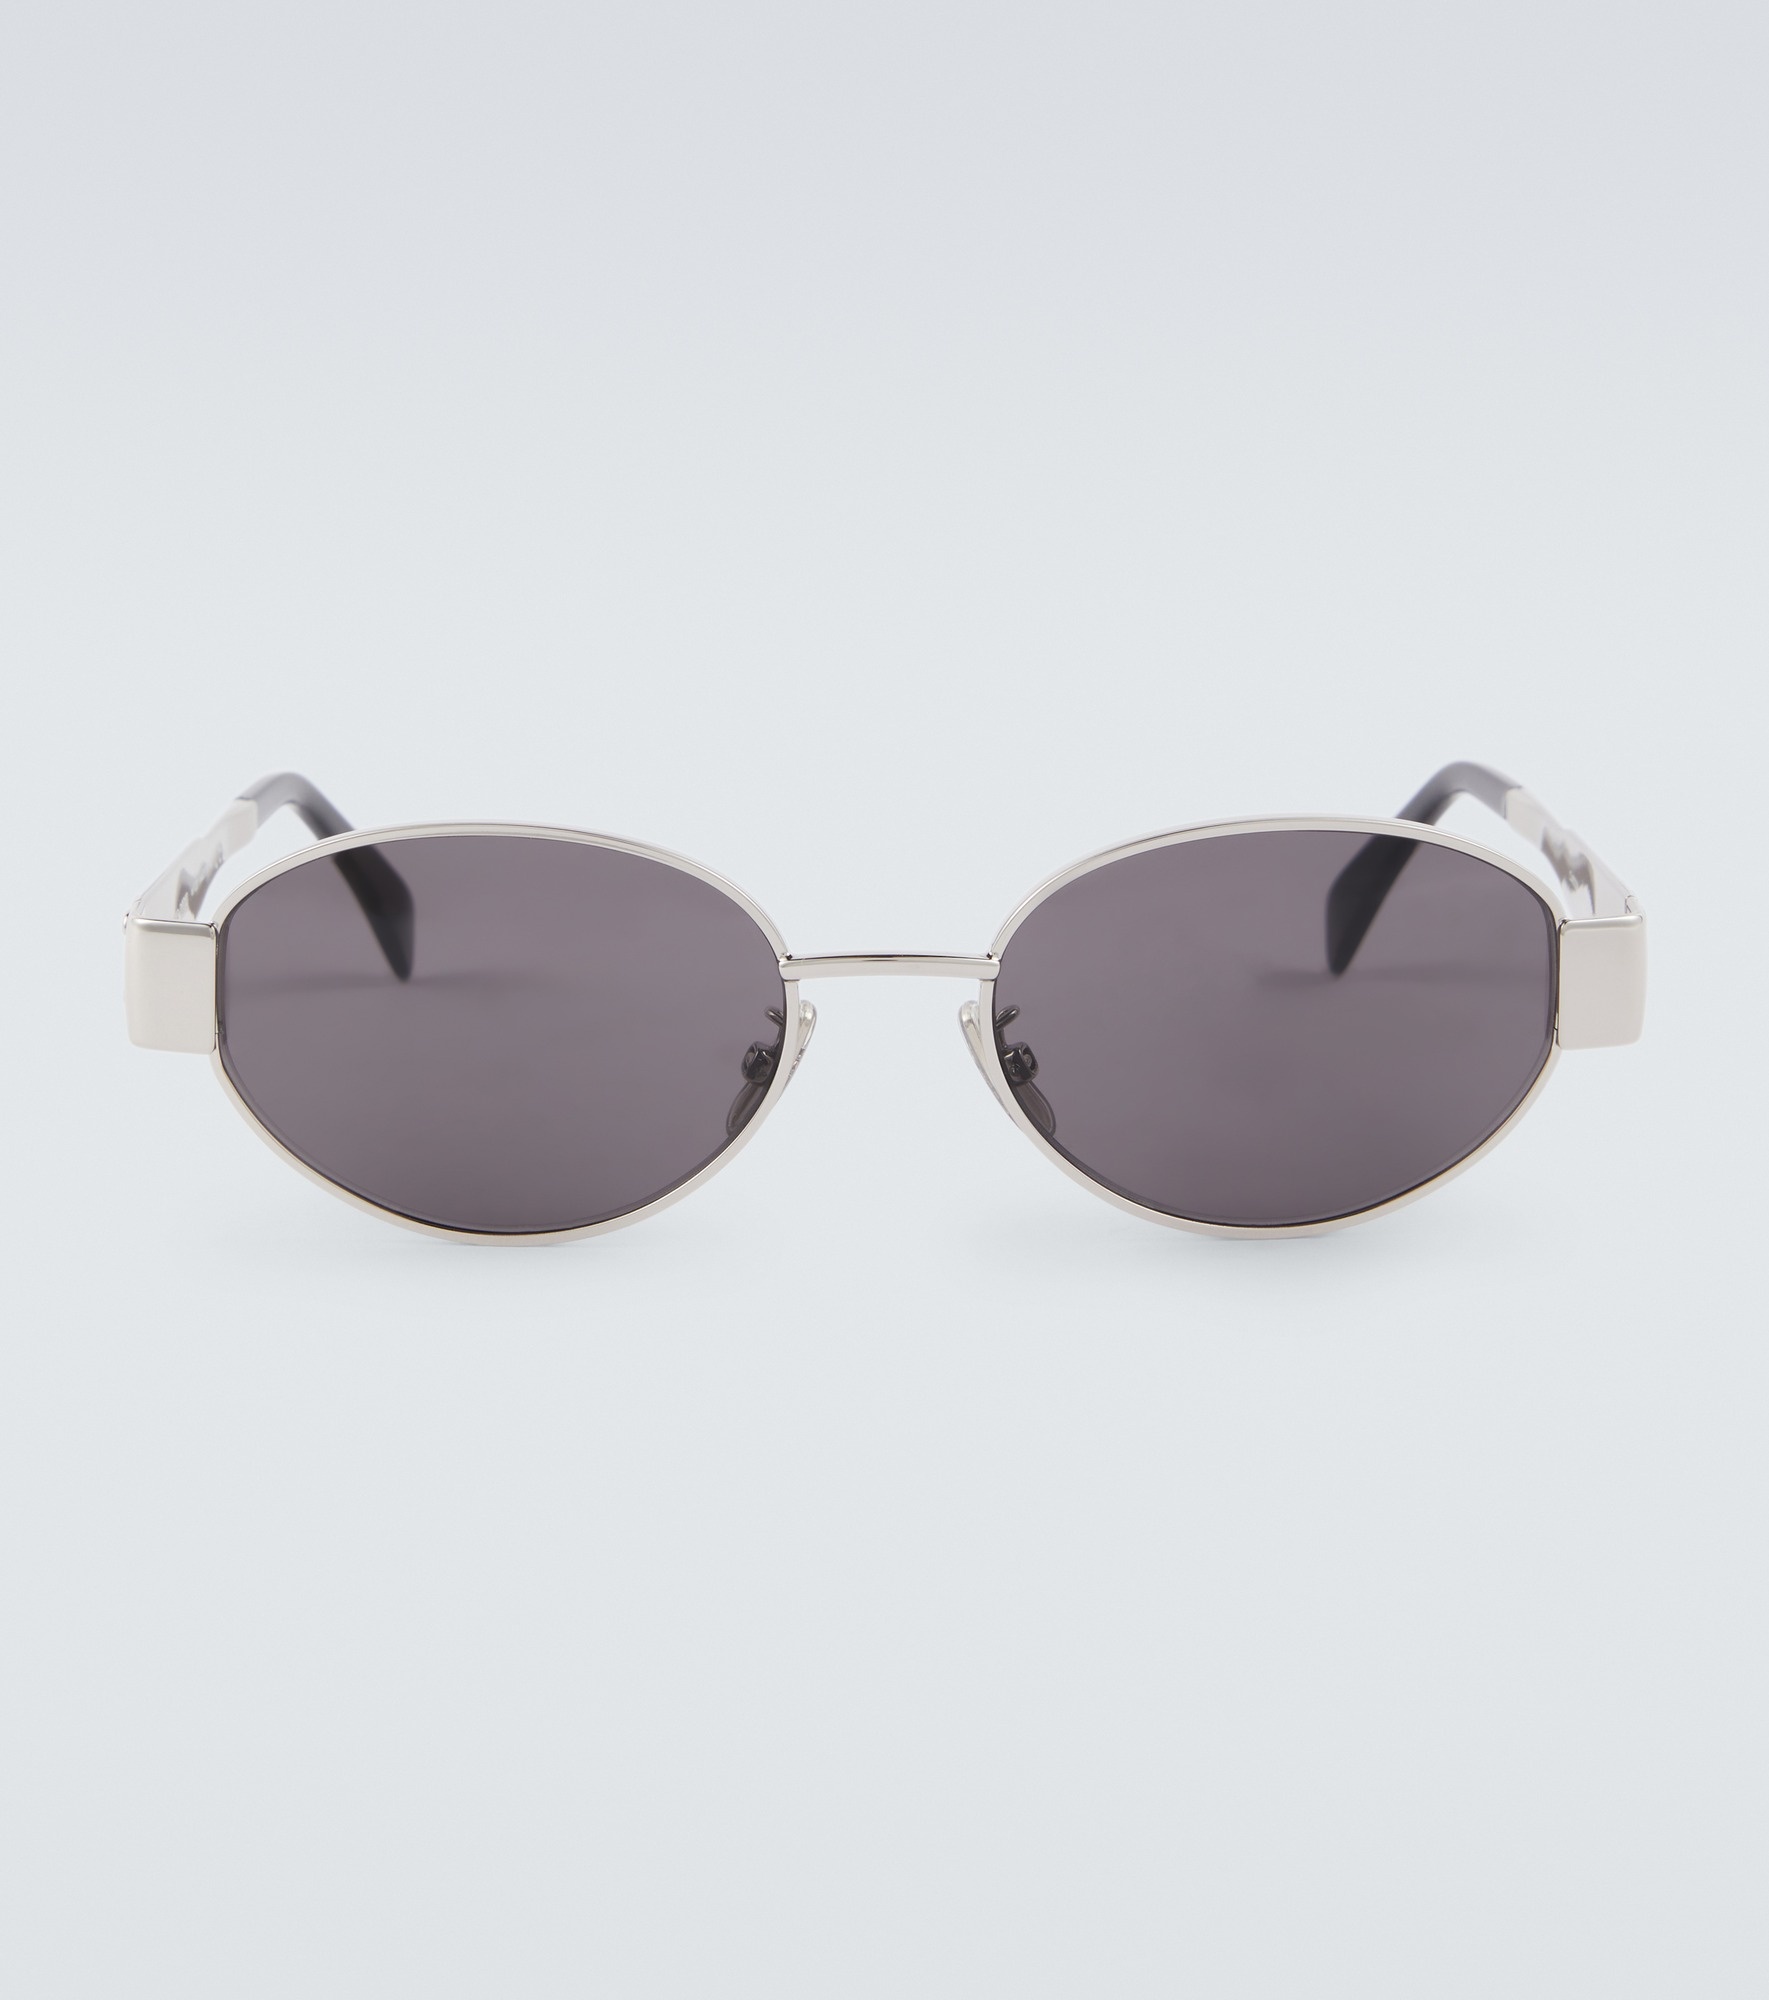 Triomphe oval sunglasses - 1